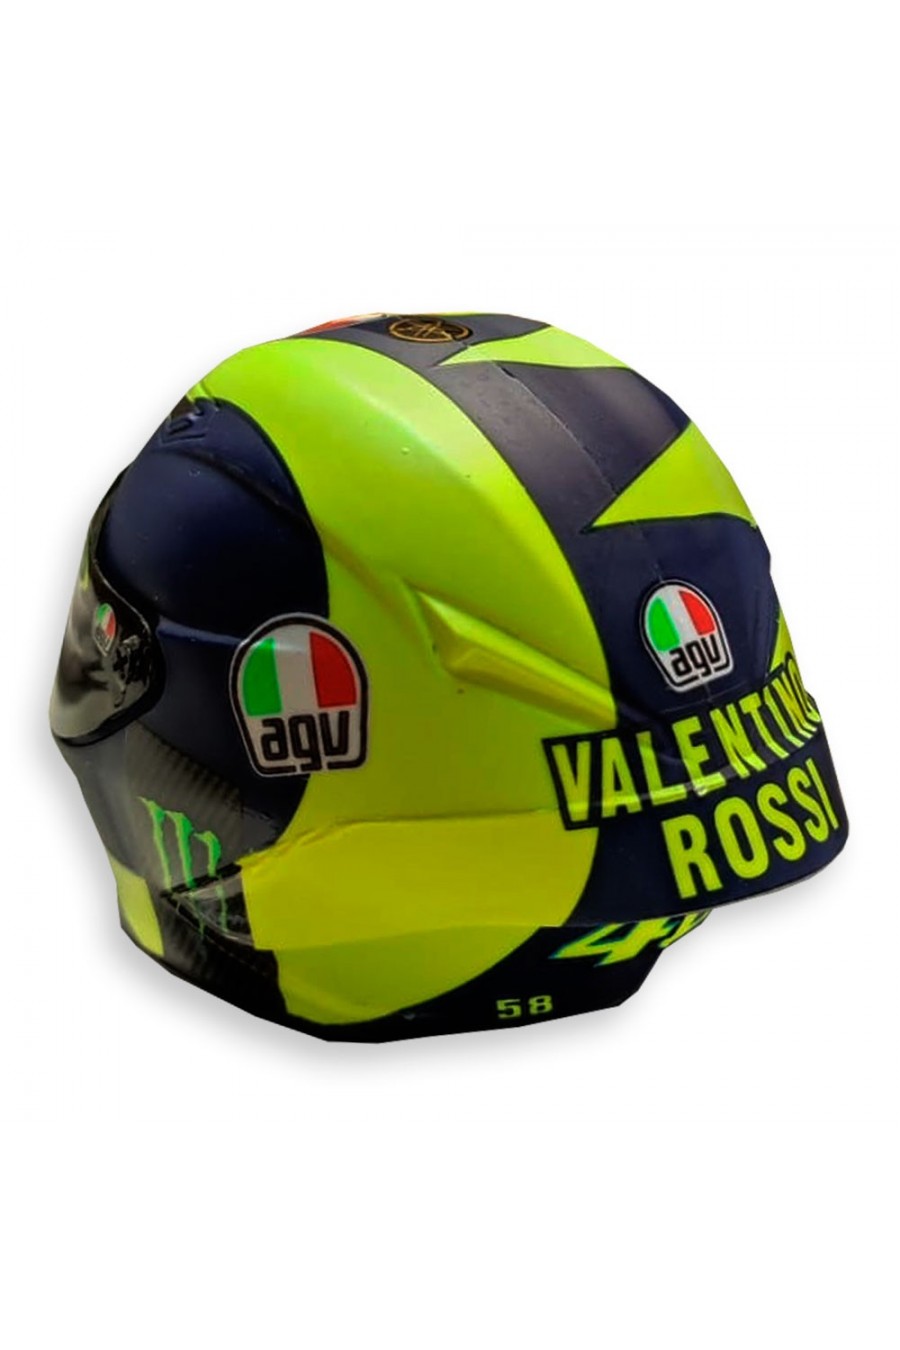 Decimal Desviar Polo Comprar Réplica 1:5 Casco Valentino Rossi 'Yamaha 2018'. Disponible en azul,